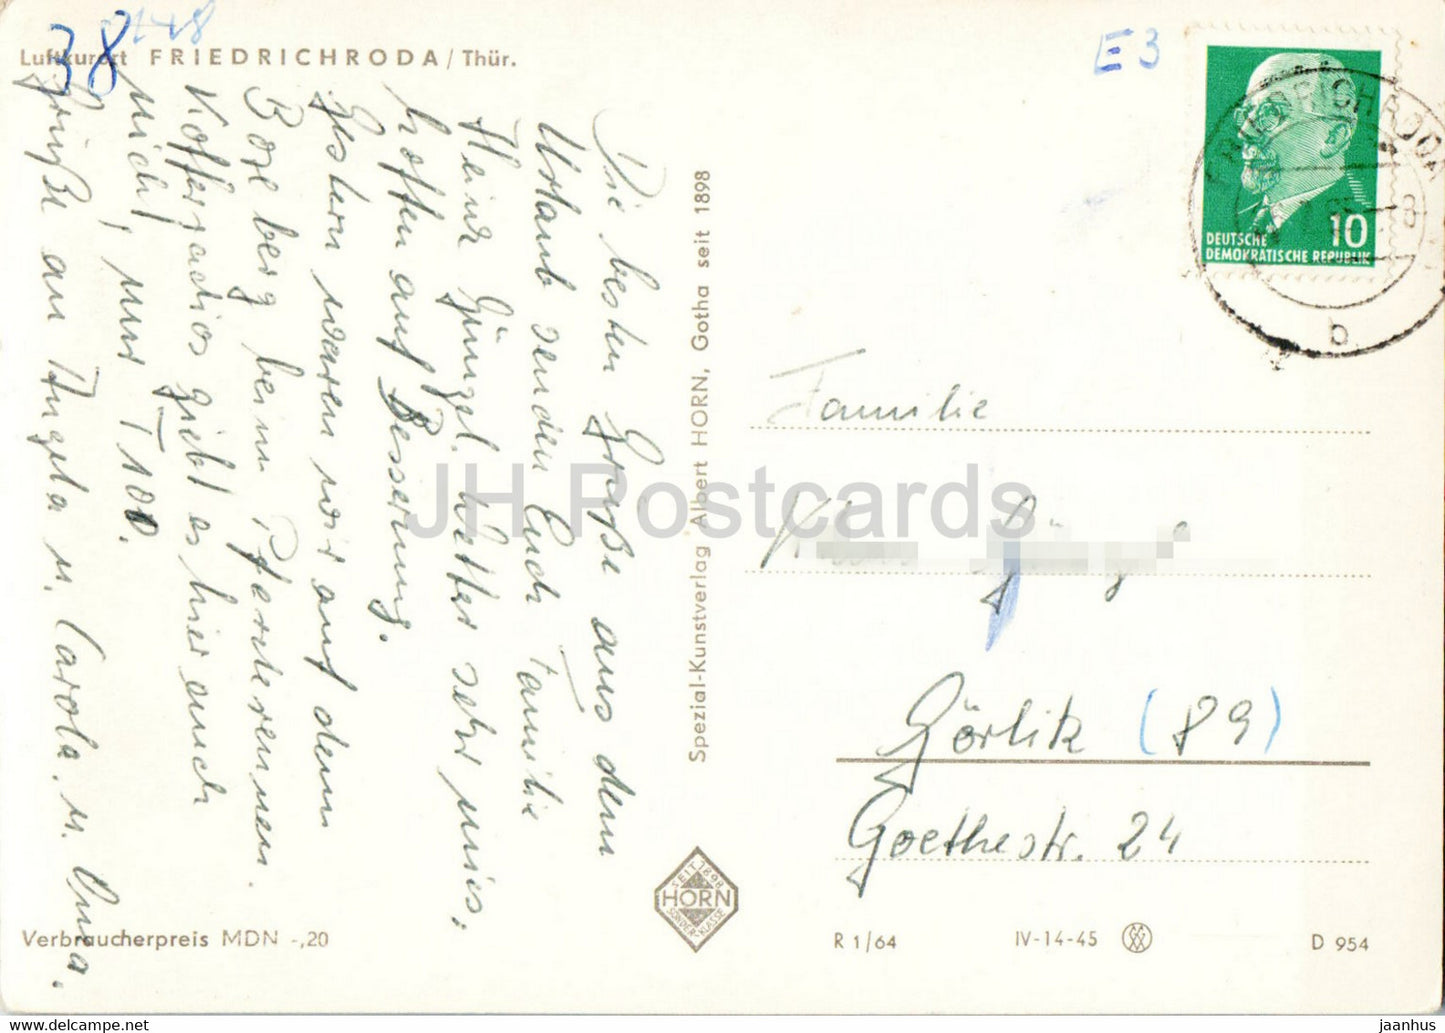 Luftkurort Friedrichroda - old postcard - 1965 - Germany DDR - used